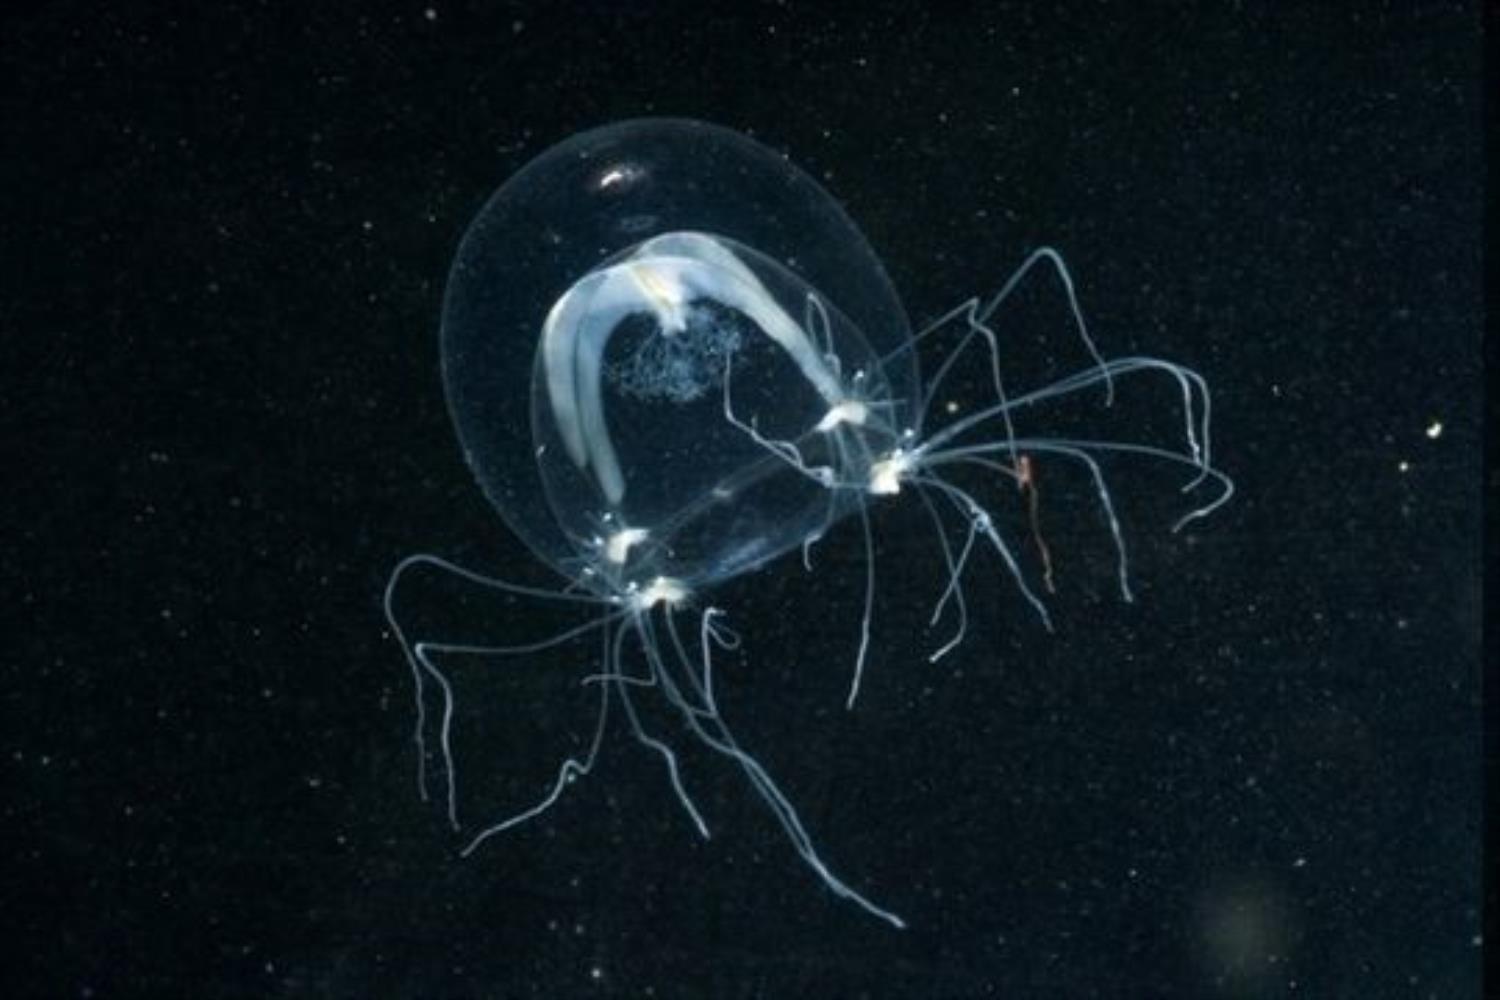 Clinging Jellyfish